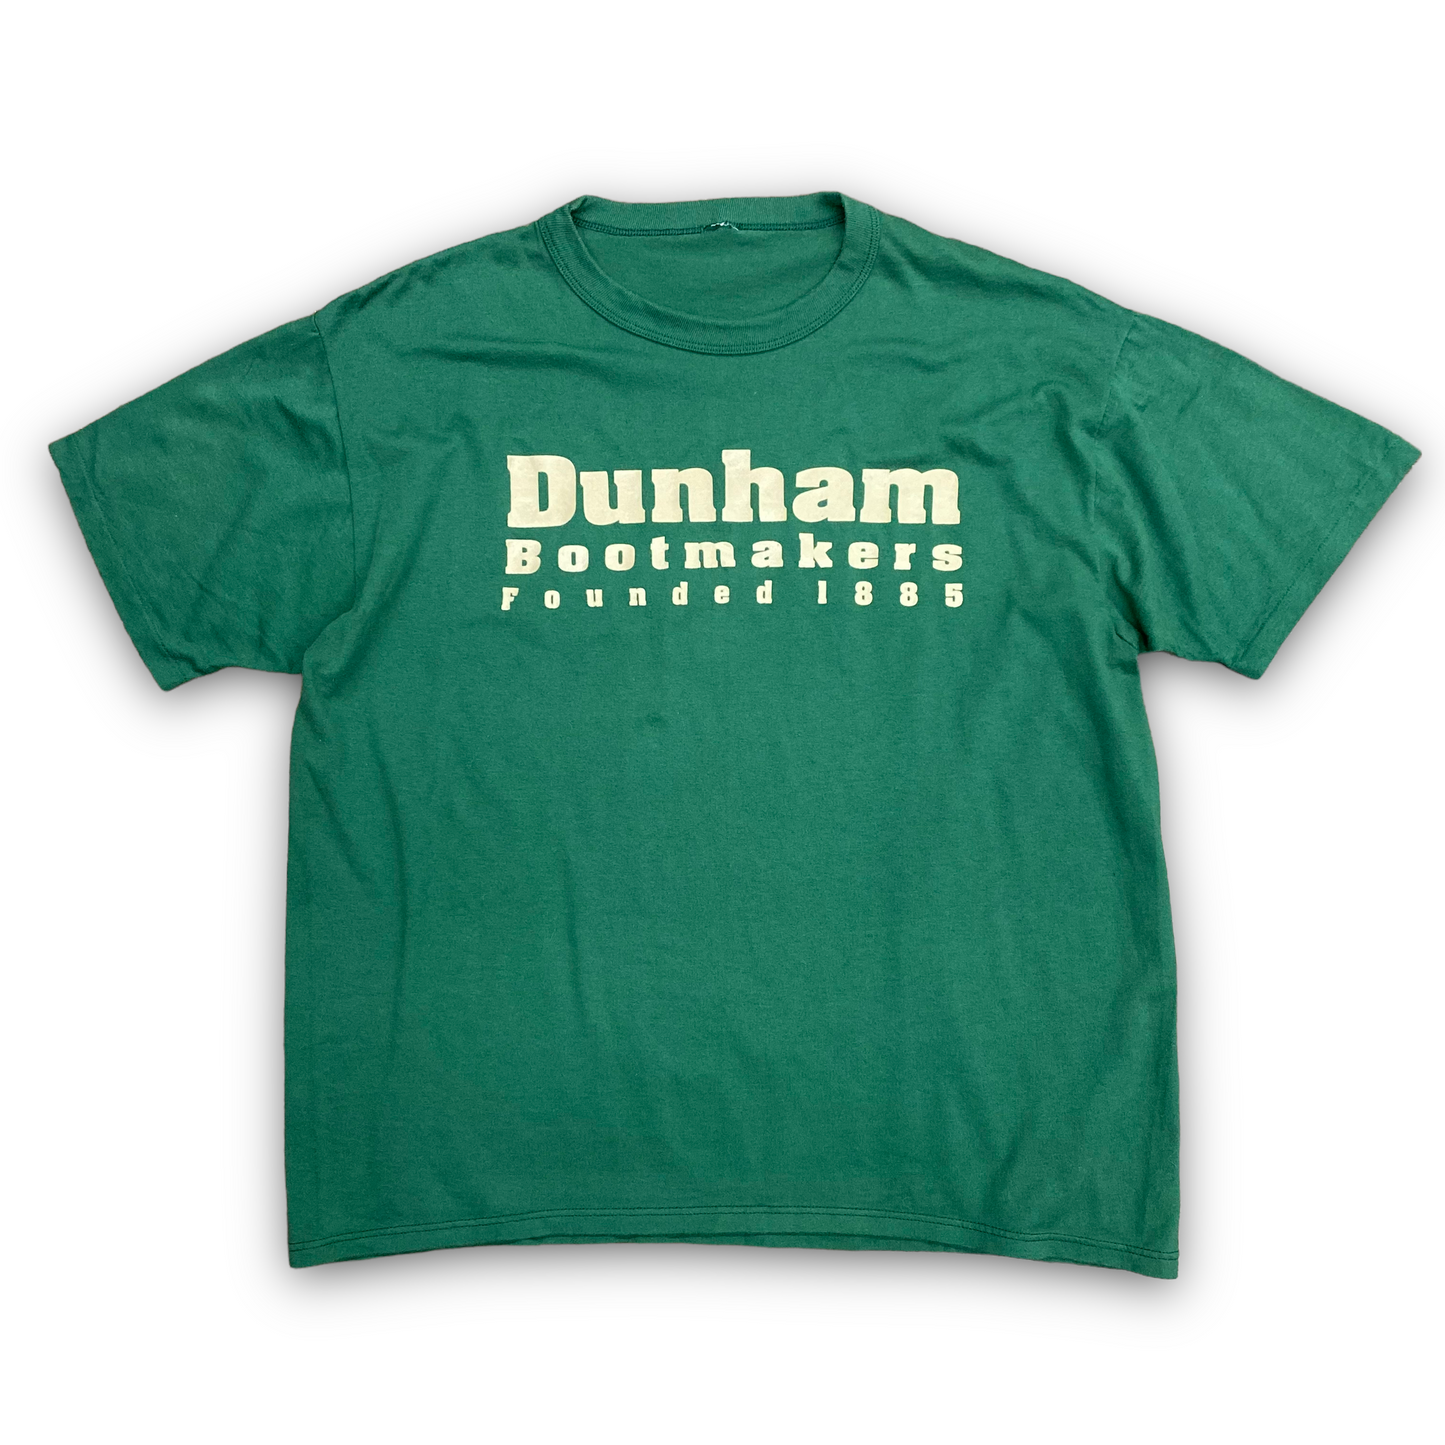 Vintage Single Stitch Dunham Bootmakers Green Tee - Size XL